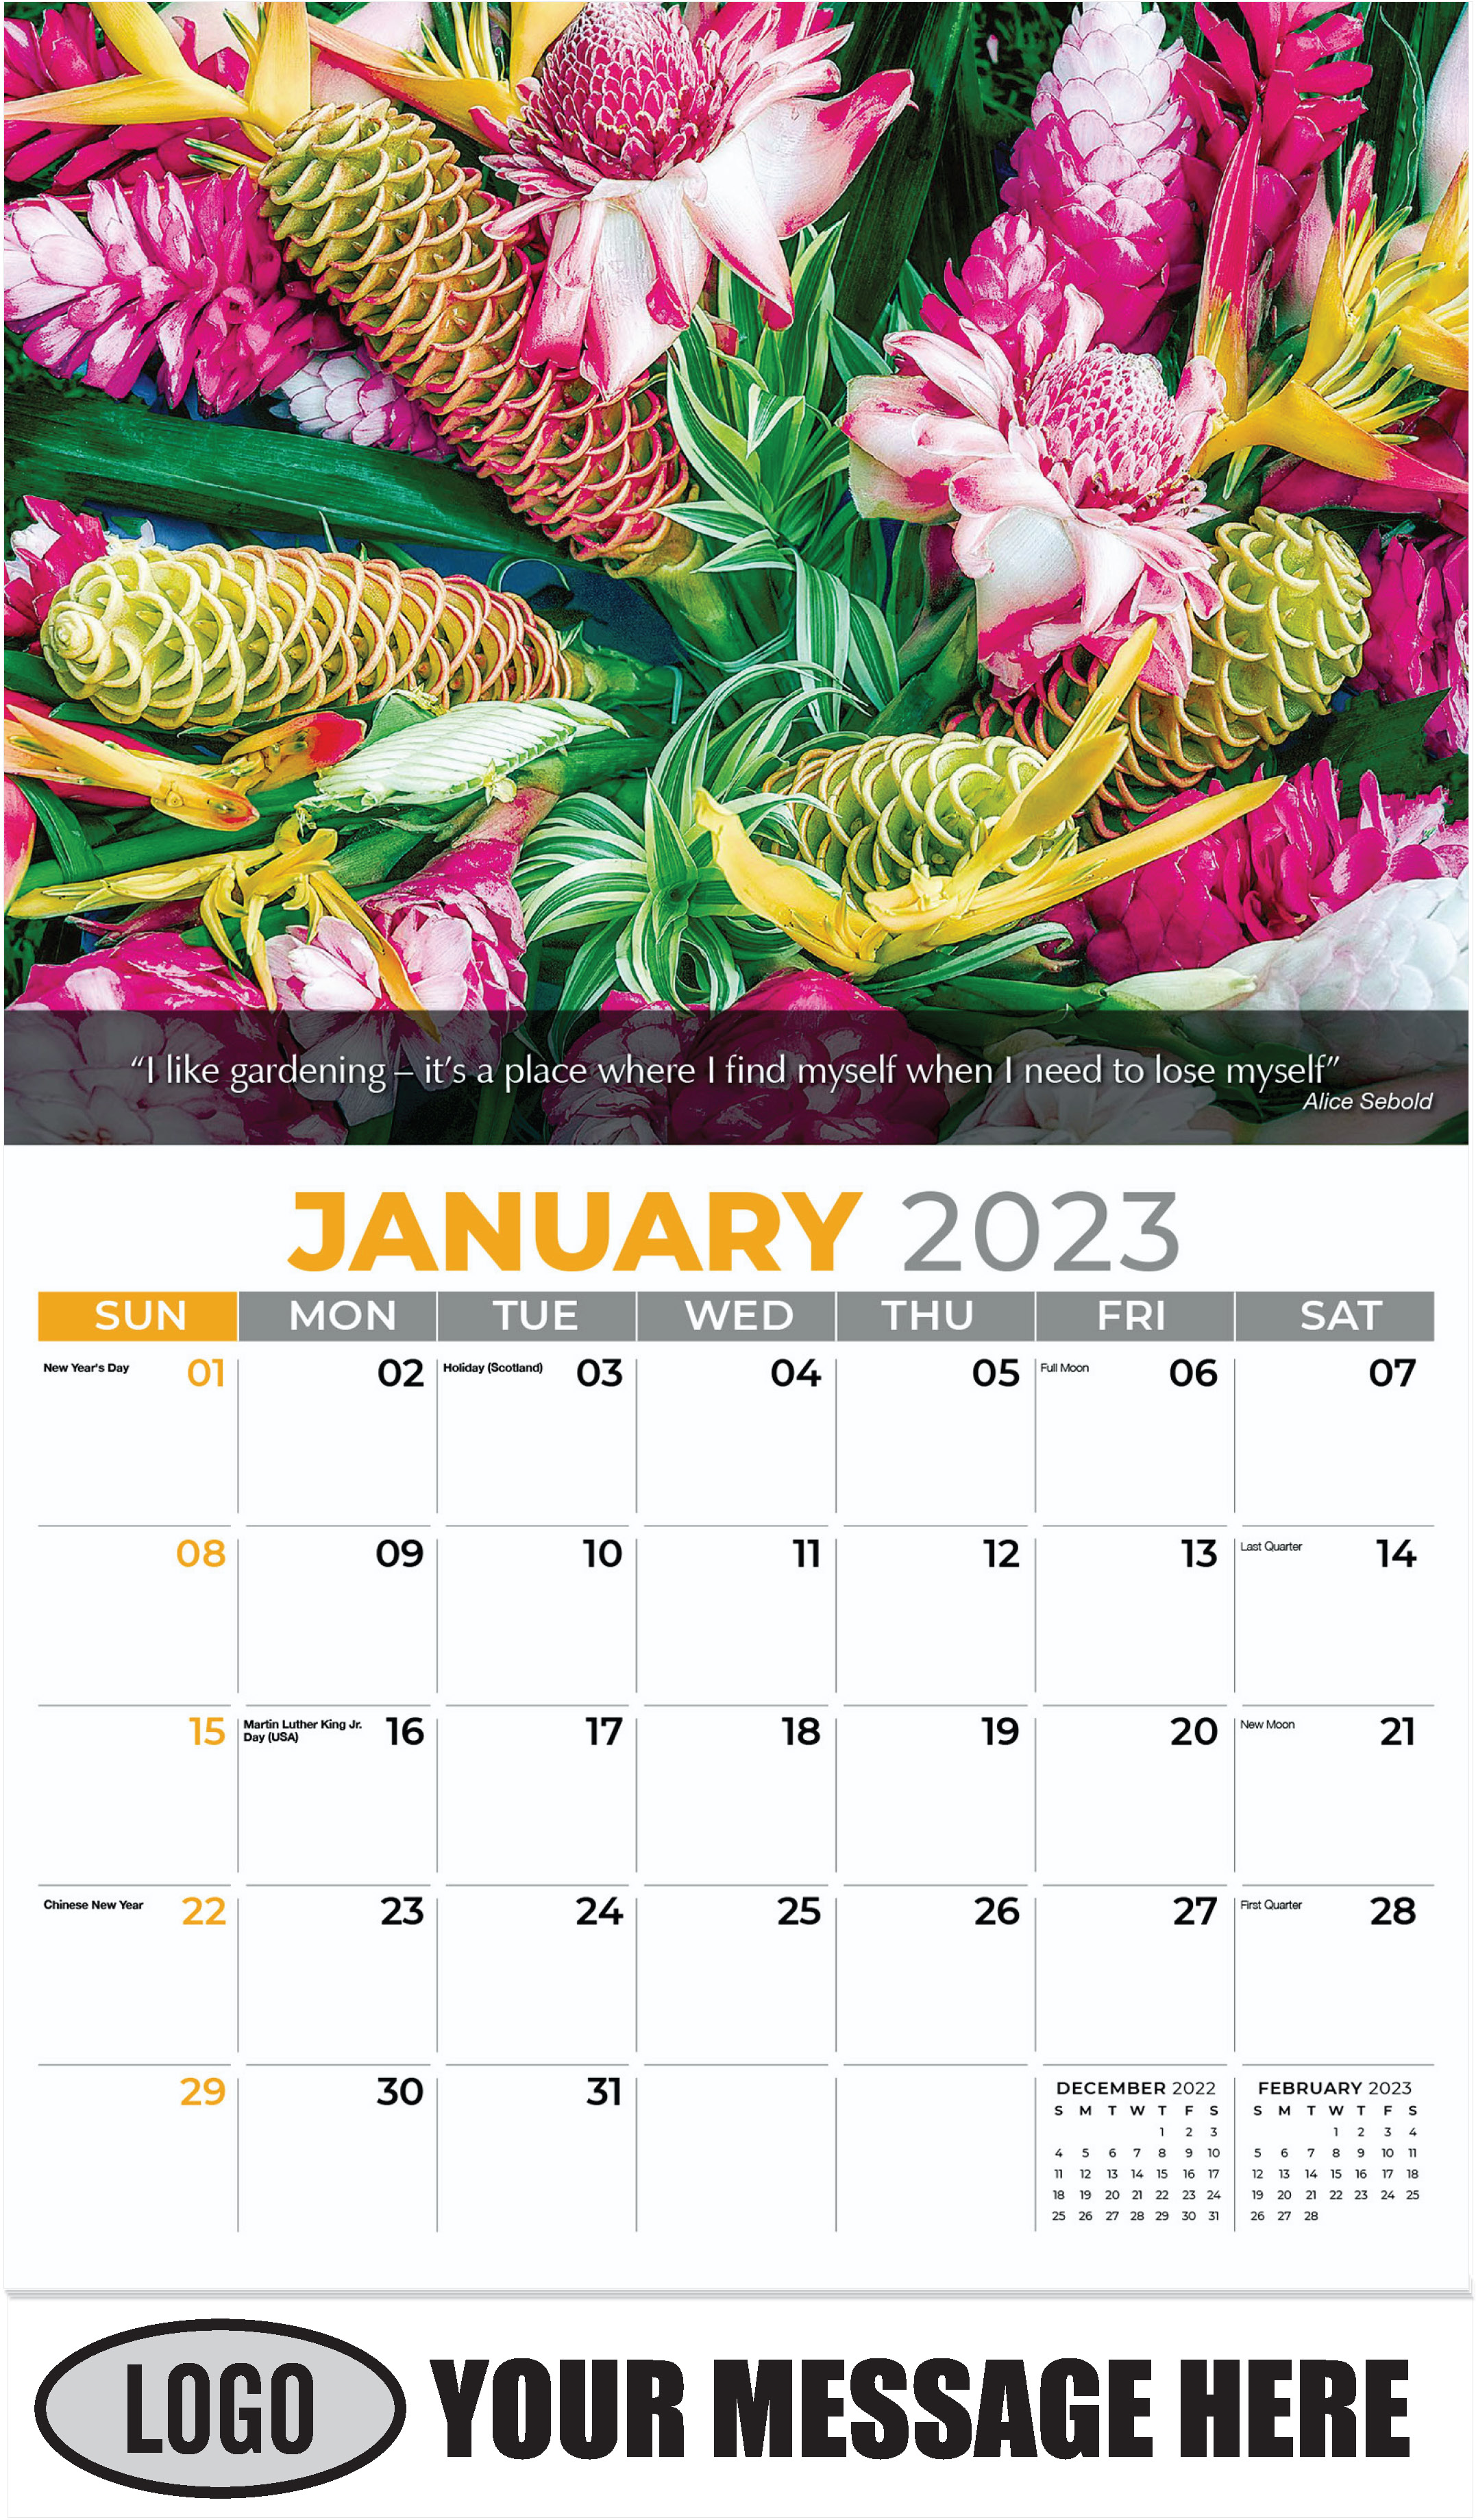 Mixture of tropical flowers - January - Flowers & Gardens 2023 Promotional Calendar